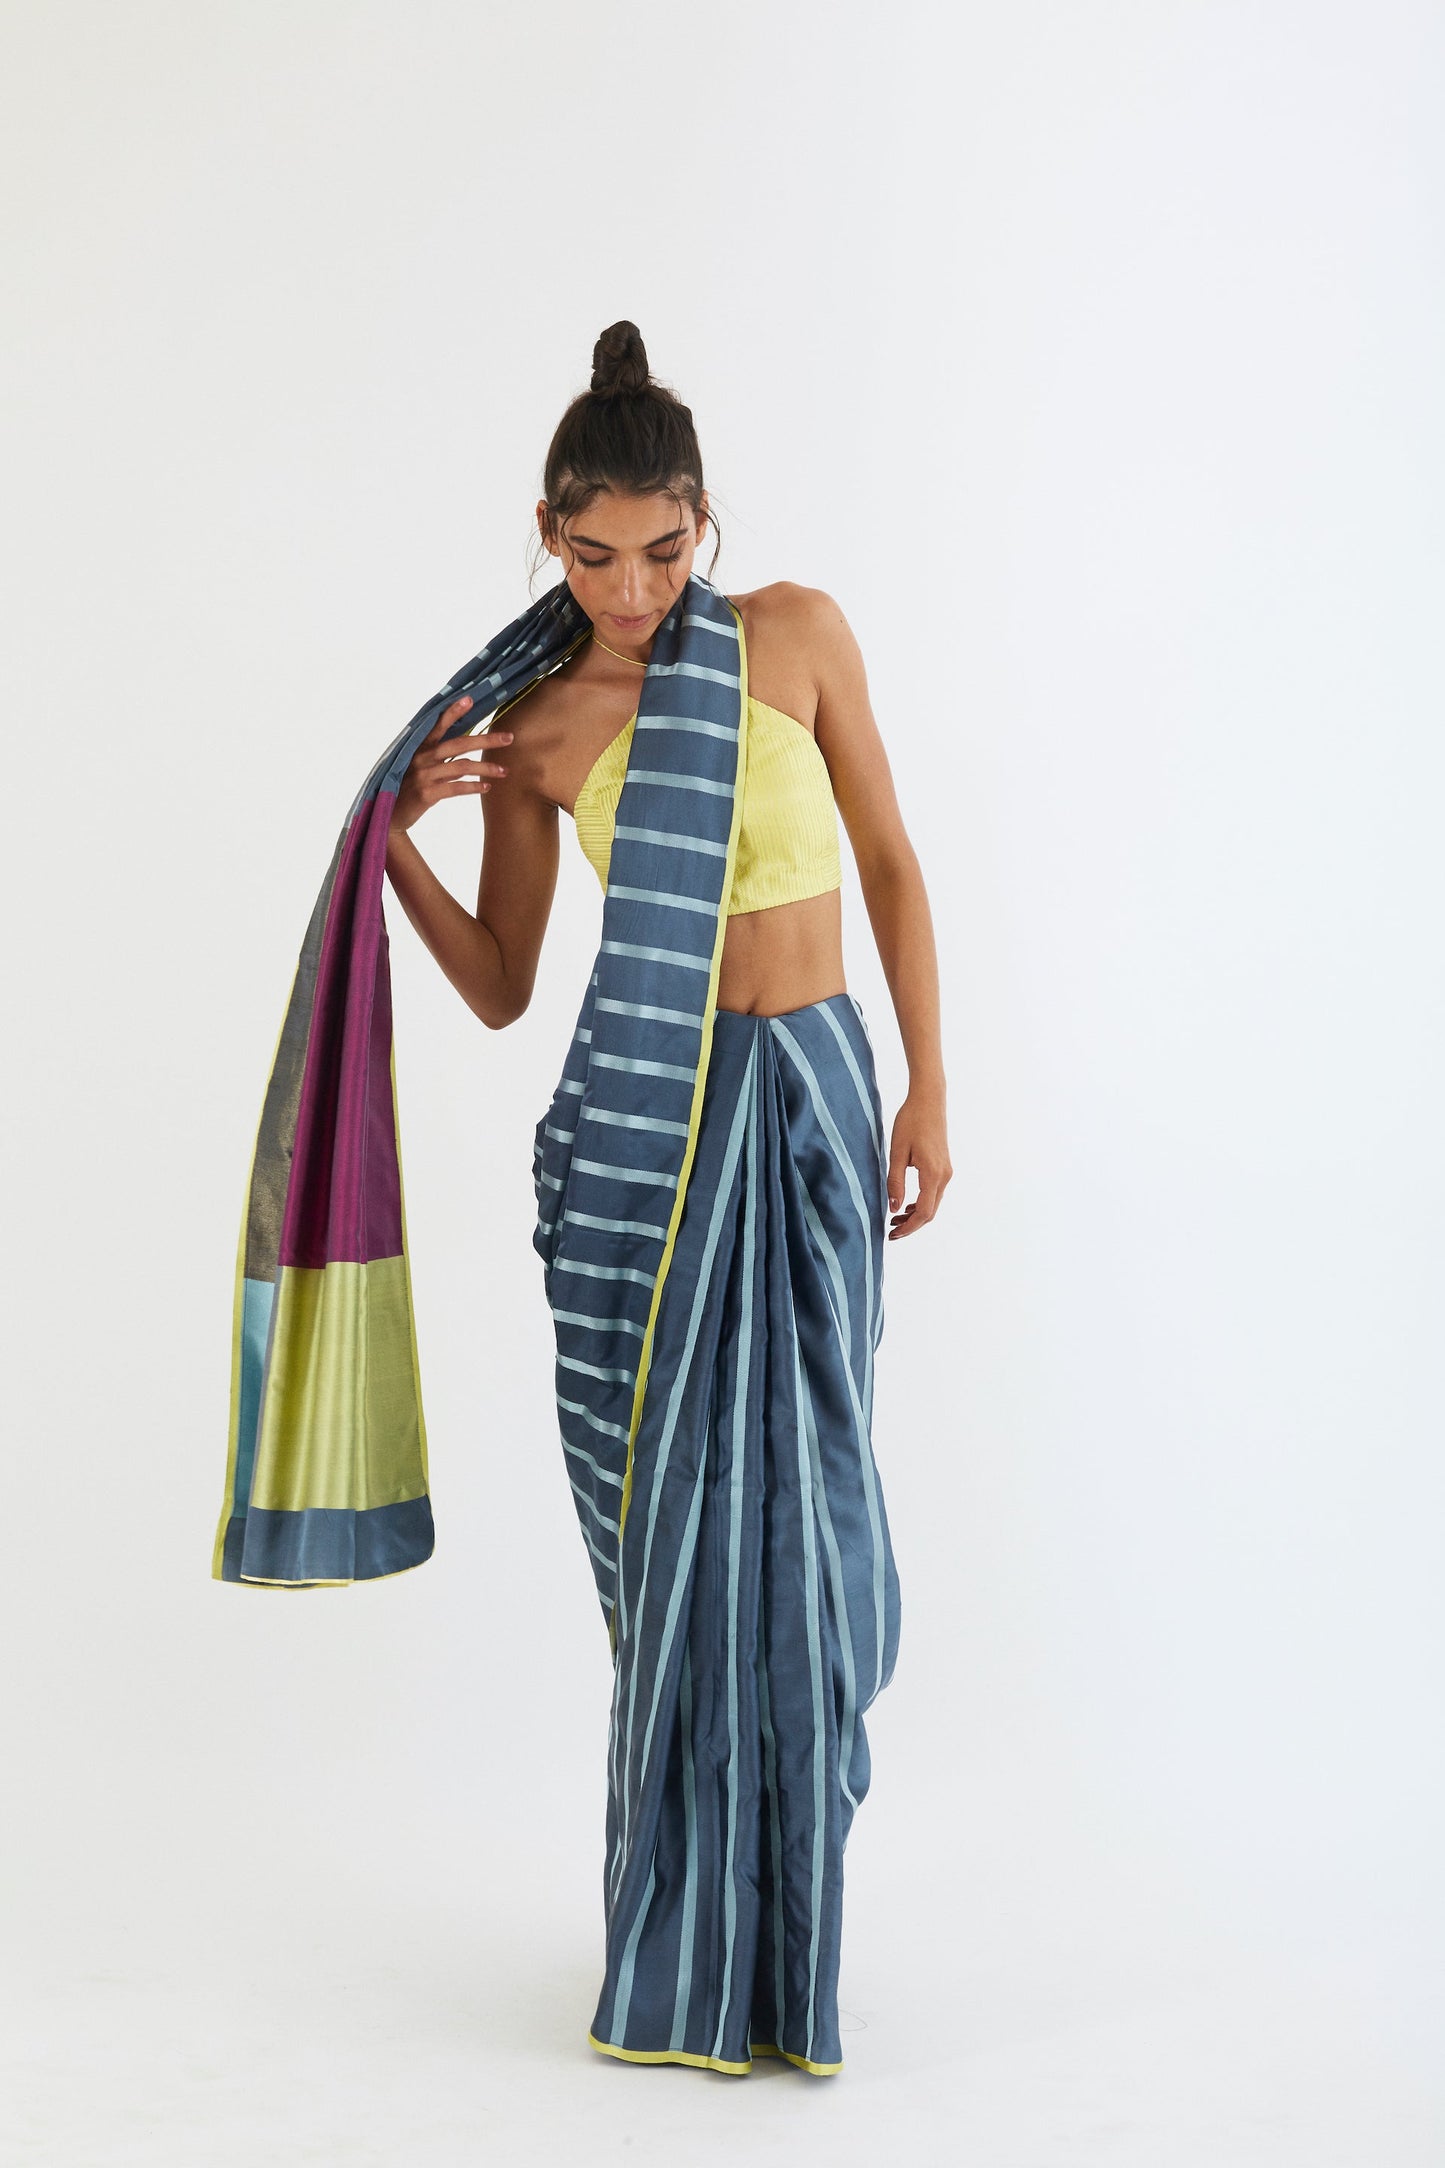 Dapple Gray Colorblock Sari